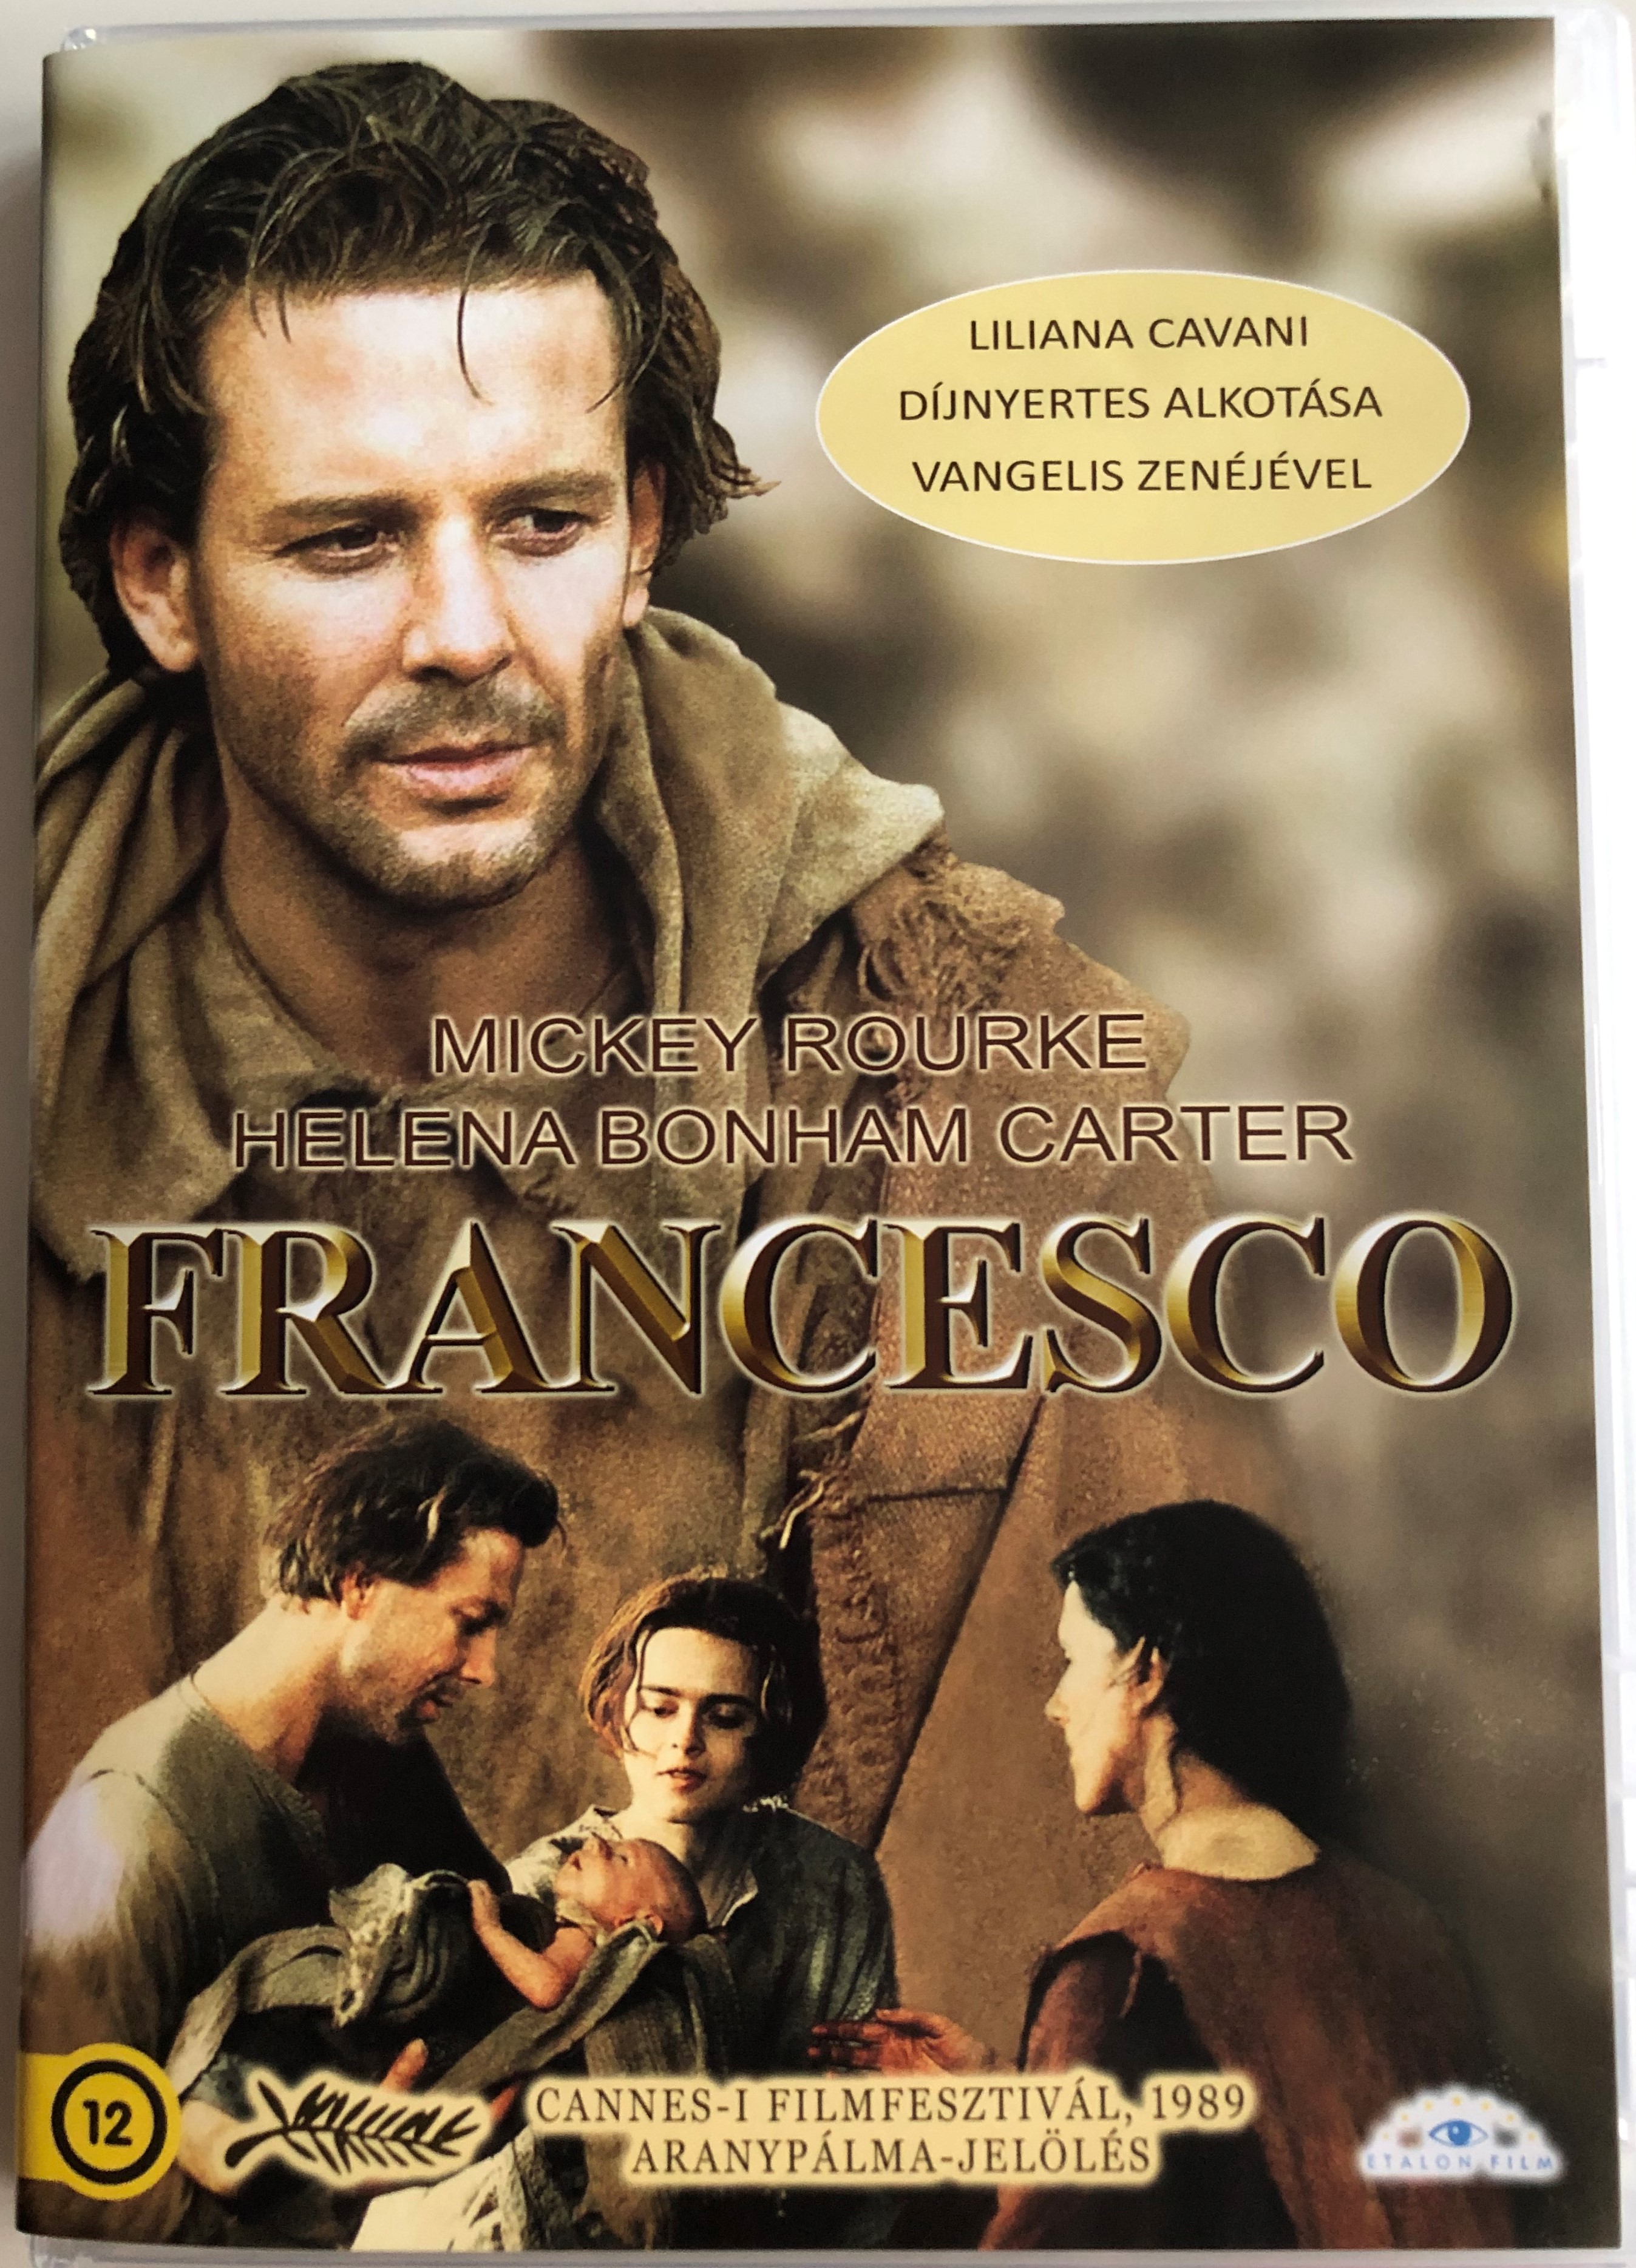 Francesco DVD 1989 - Directed by Liliana Cavani 1